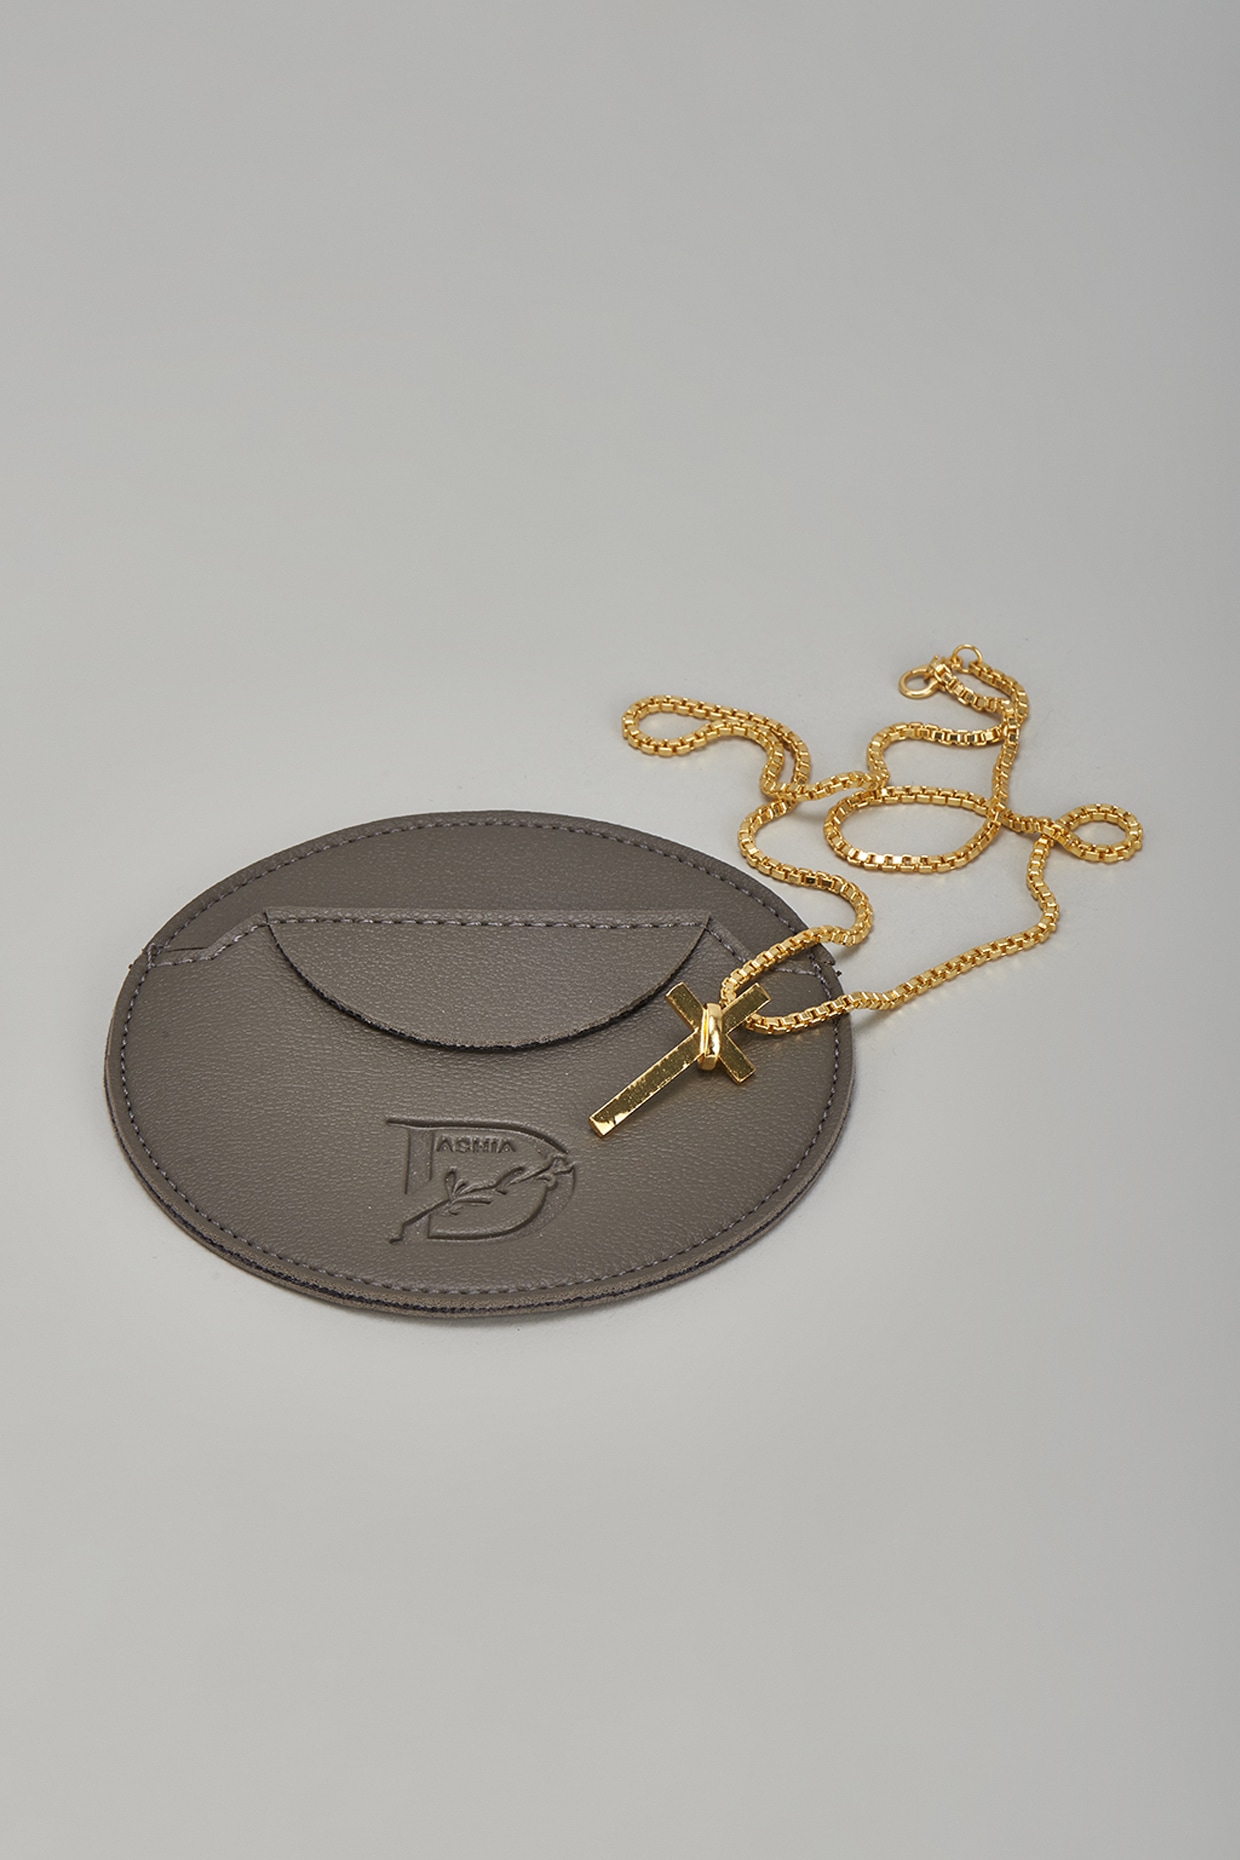 Beveled Cross Necklace - Gold-Filled Pendant on 24